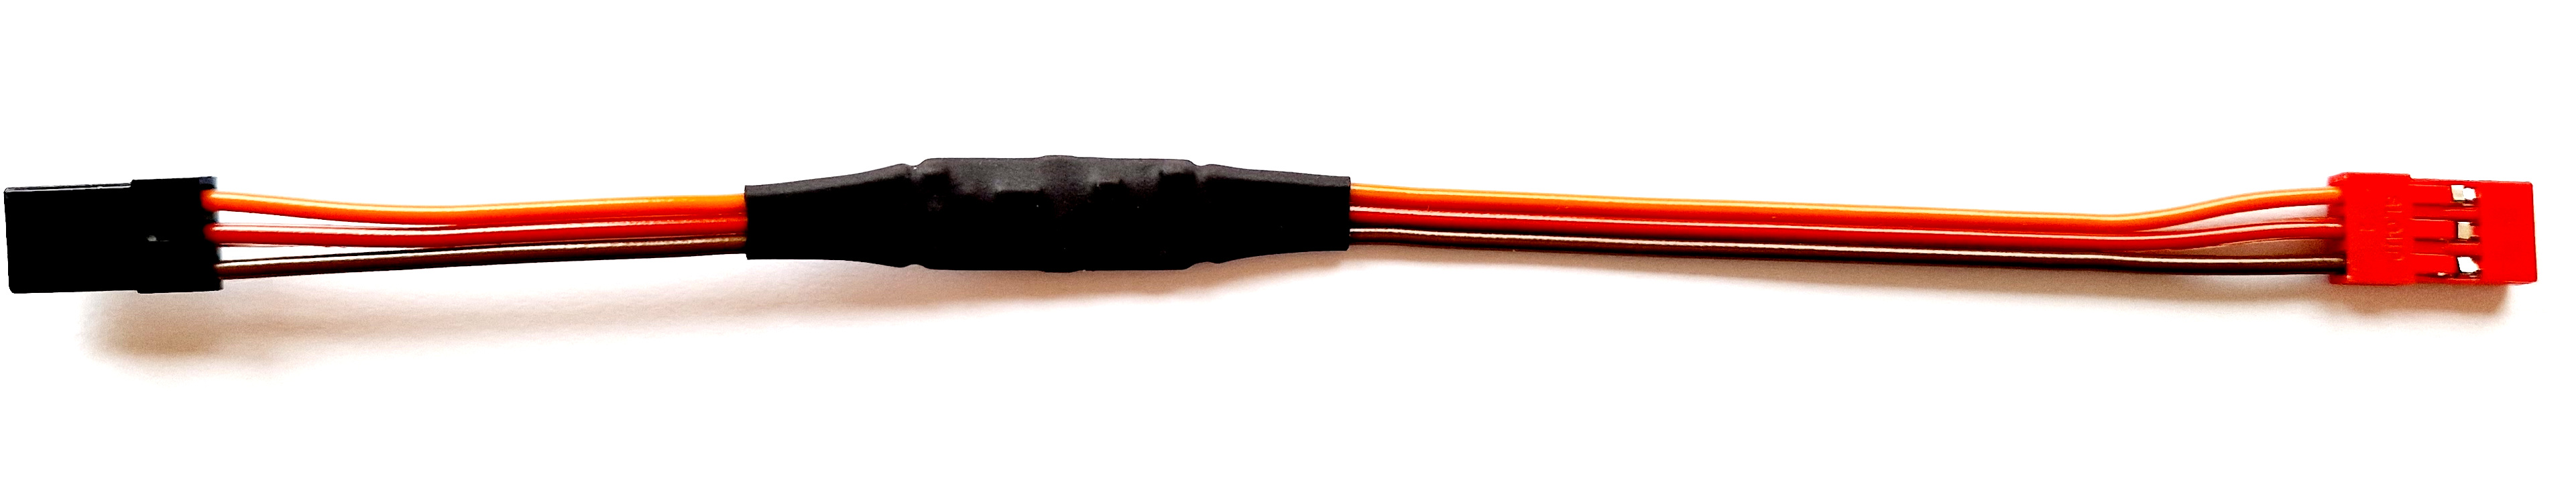 Futaba-cable.jpg